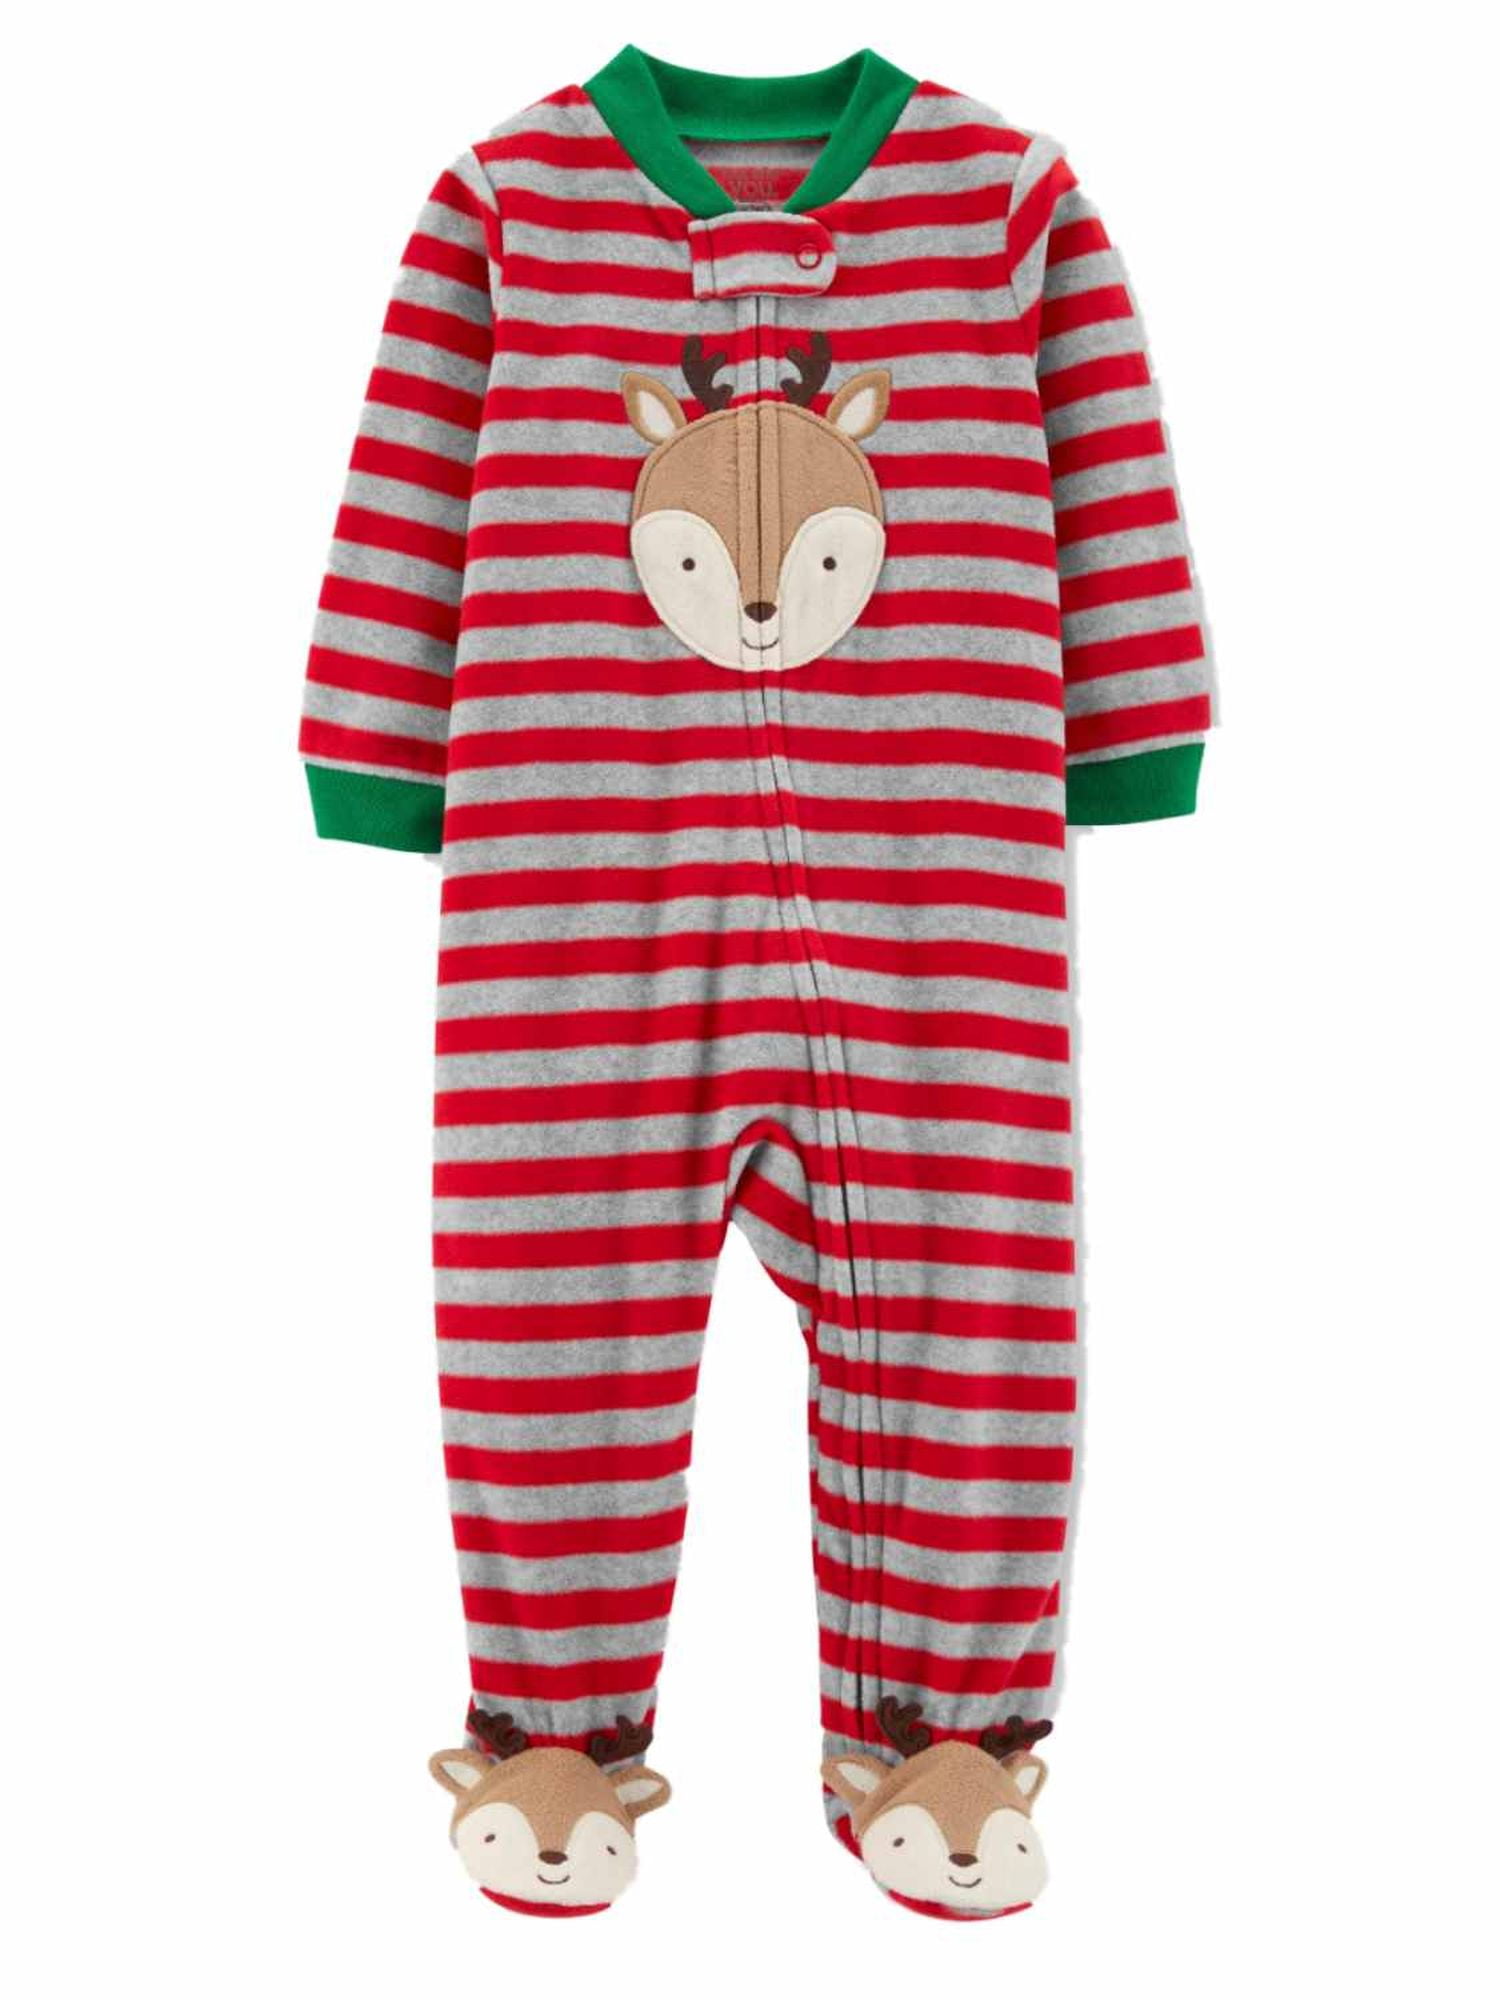 Carters Infant Boys Green Stripe Santa Helper Christmas Sleeper Pajamas & Hat 